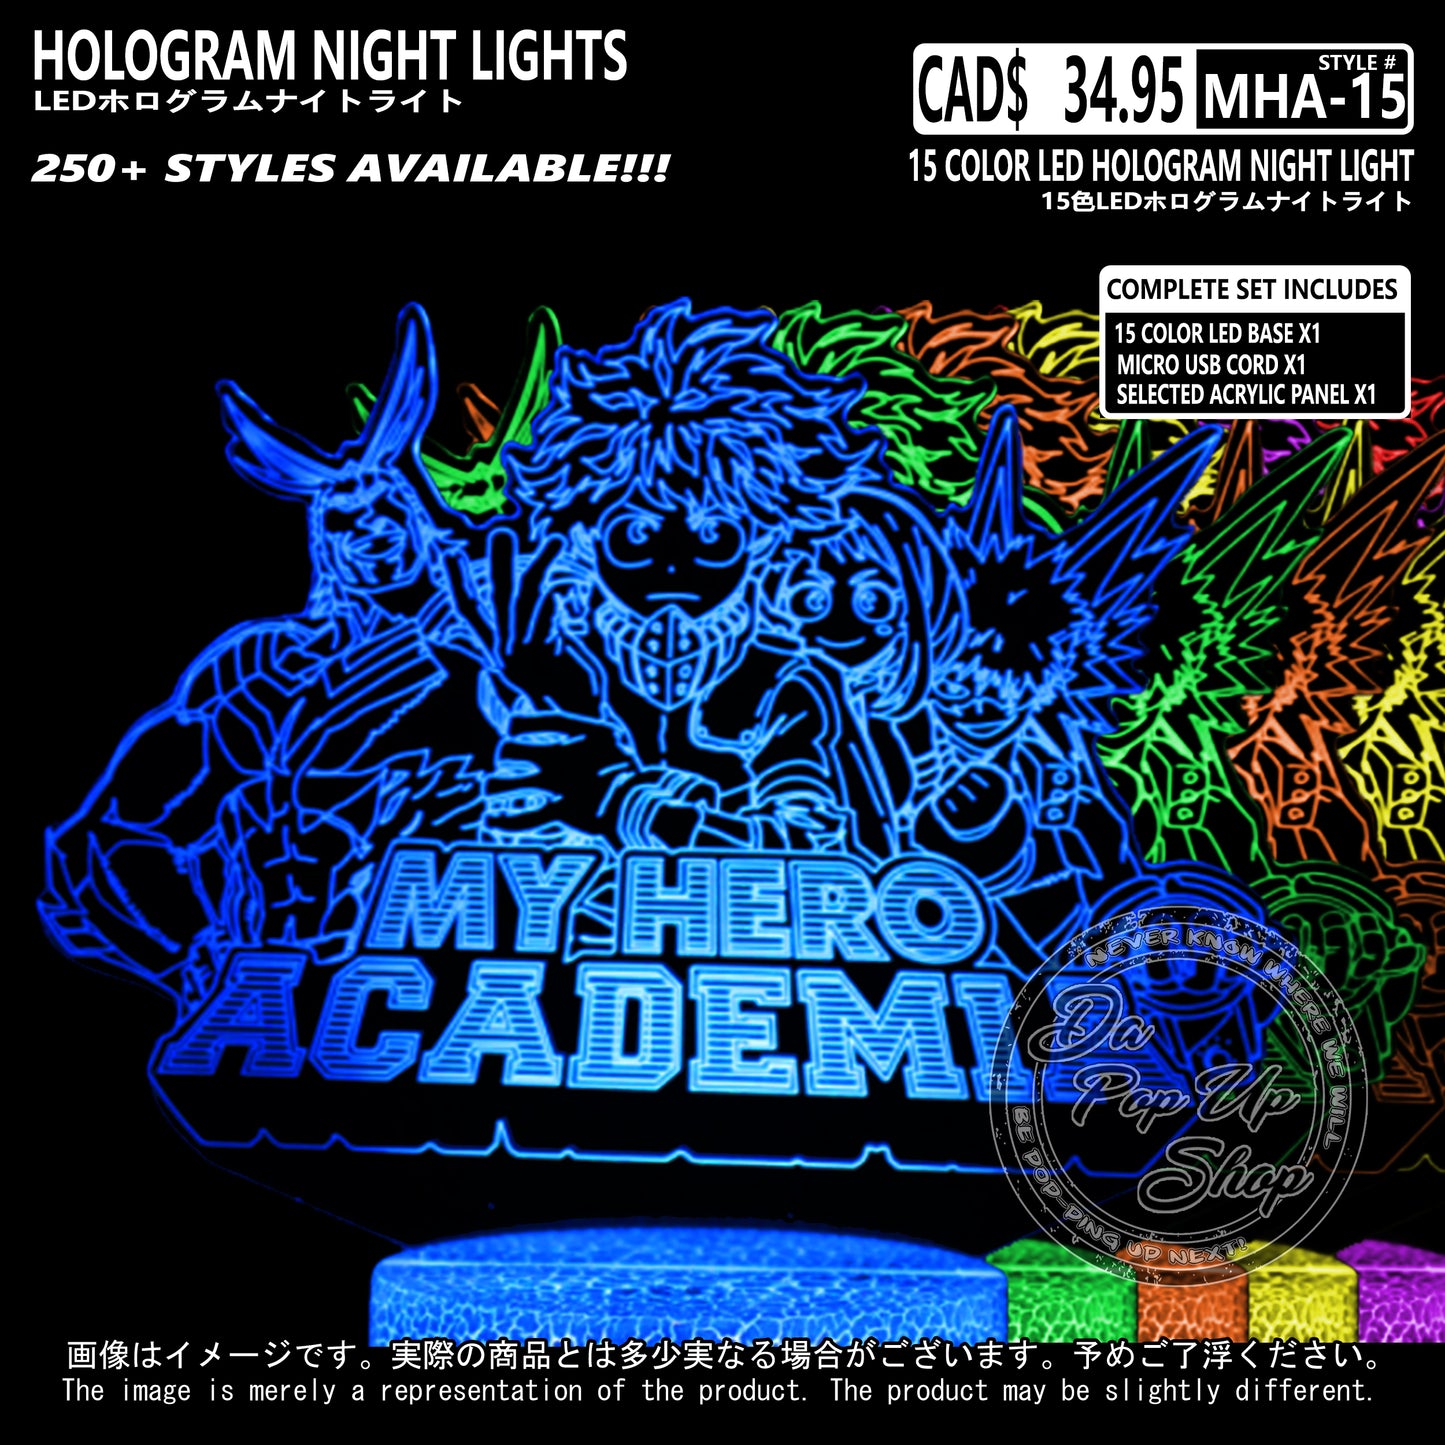 (MHA-15) My Hero Academia Hologram LED Night Light